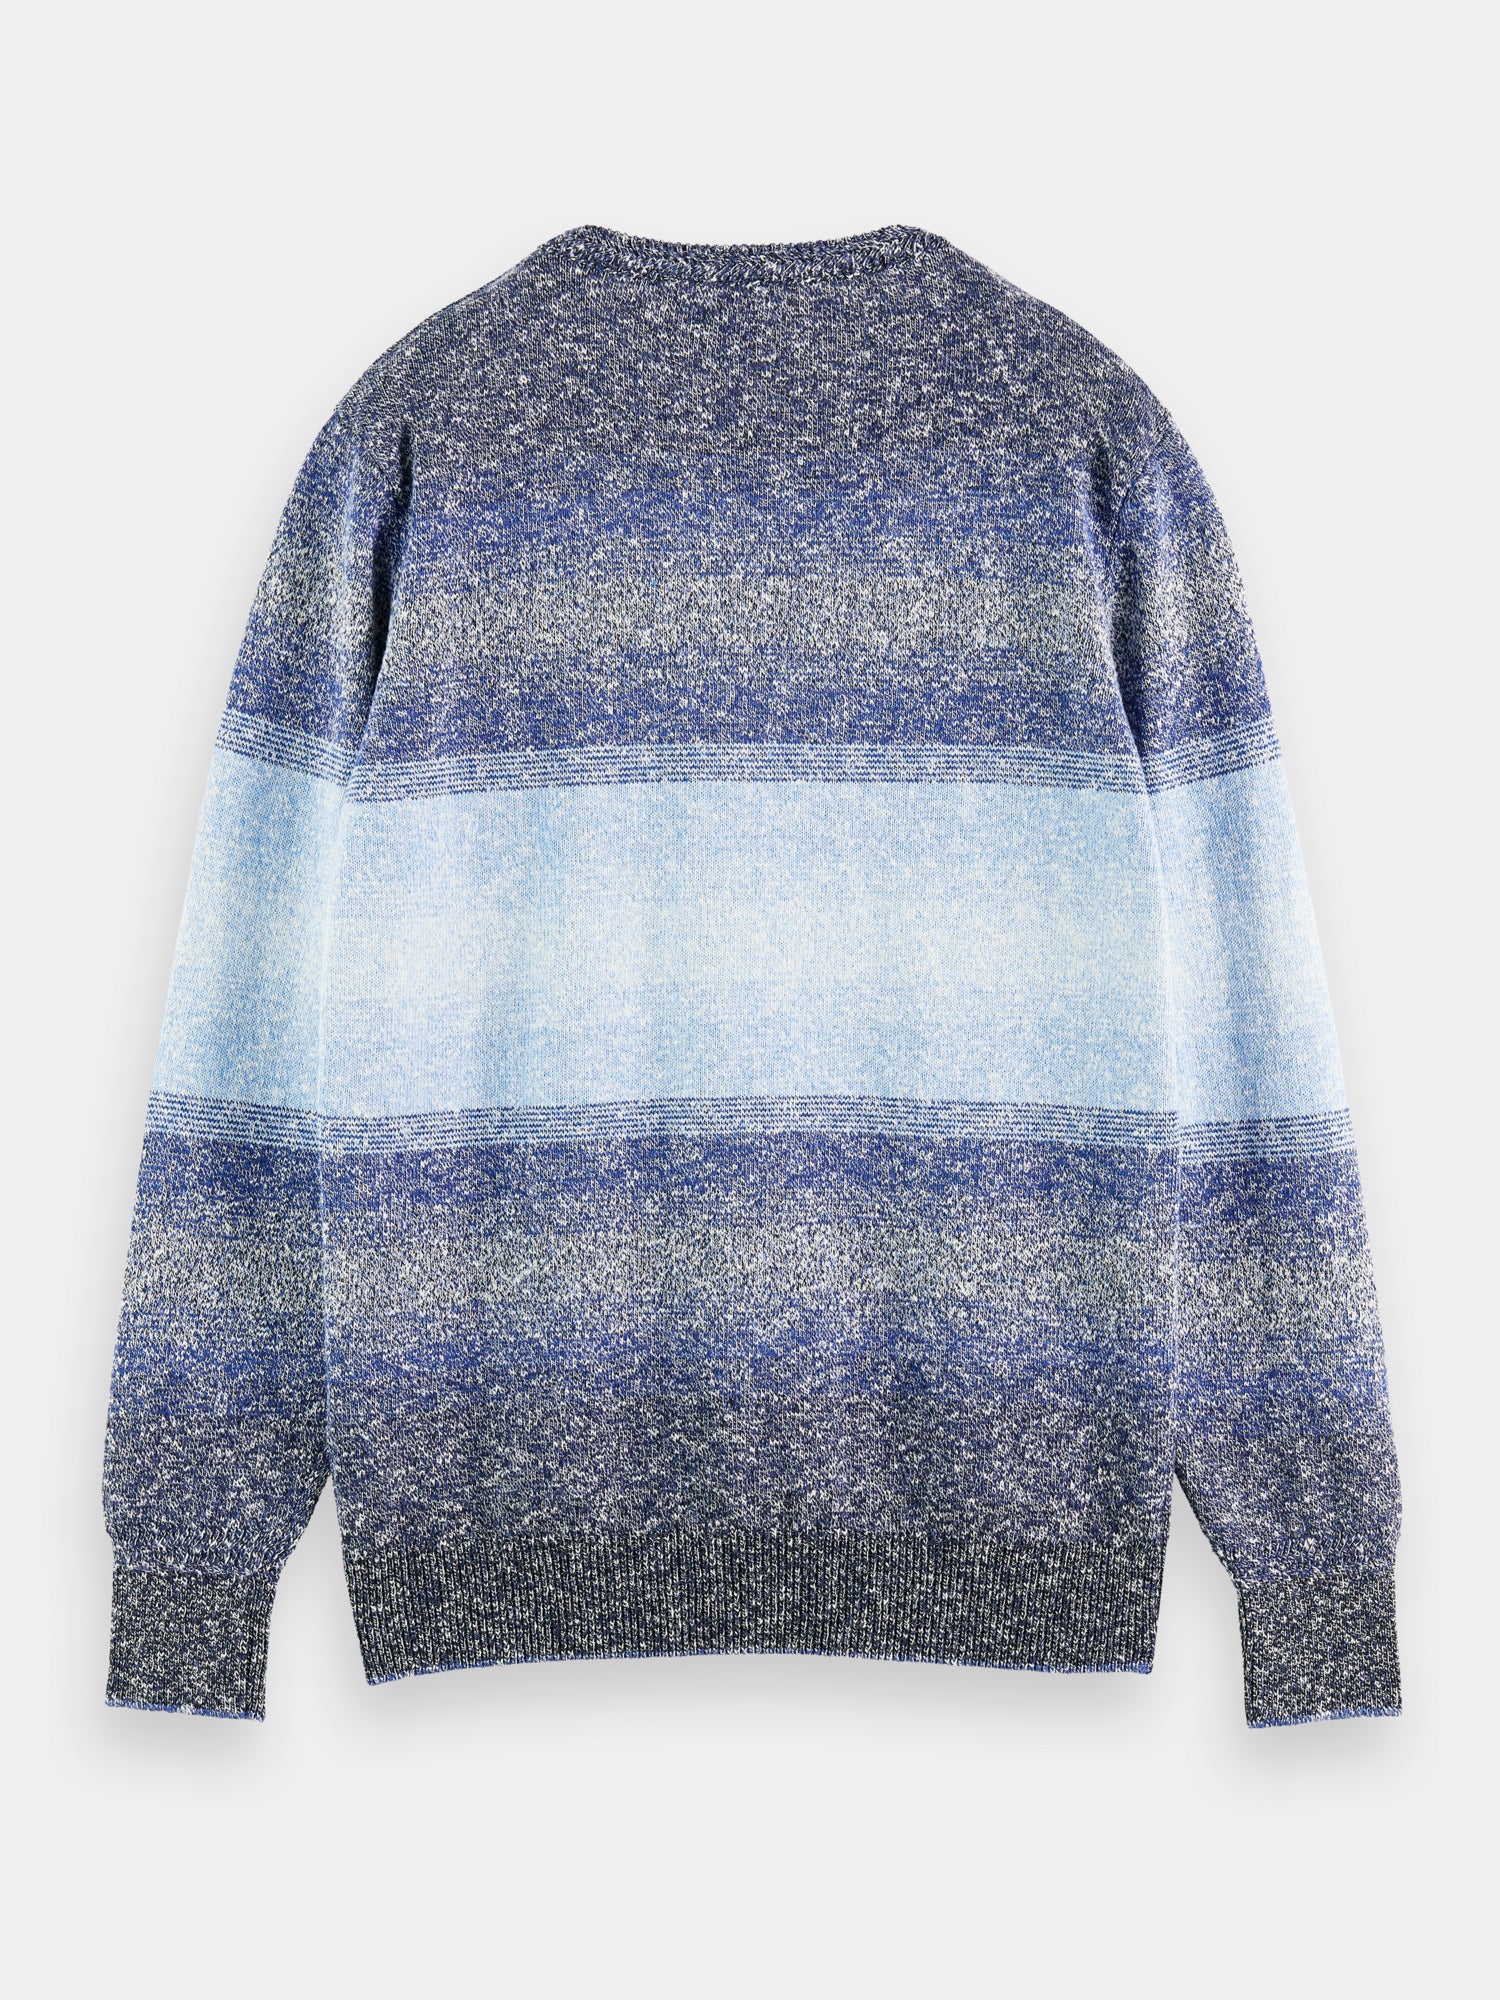 Gradient crewneck sweater | Scotch & Soda NZ